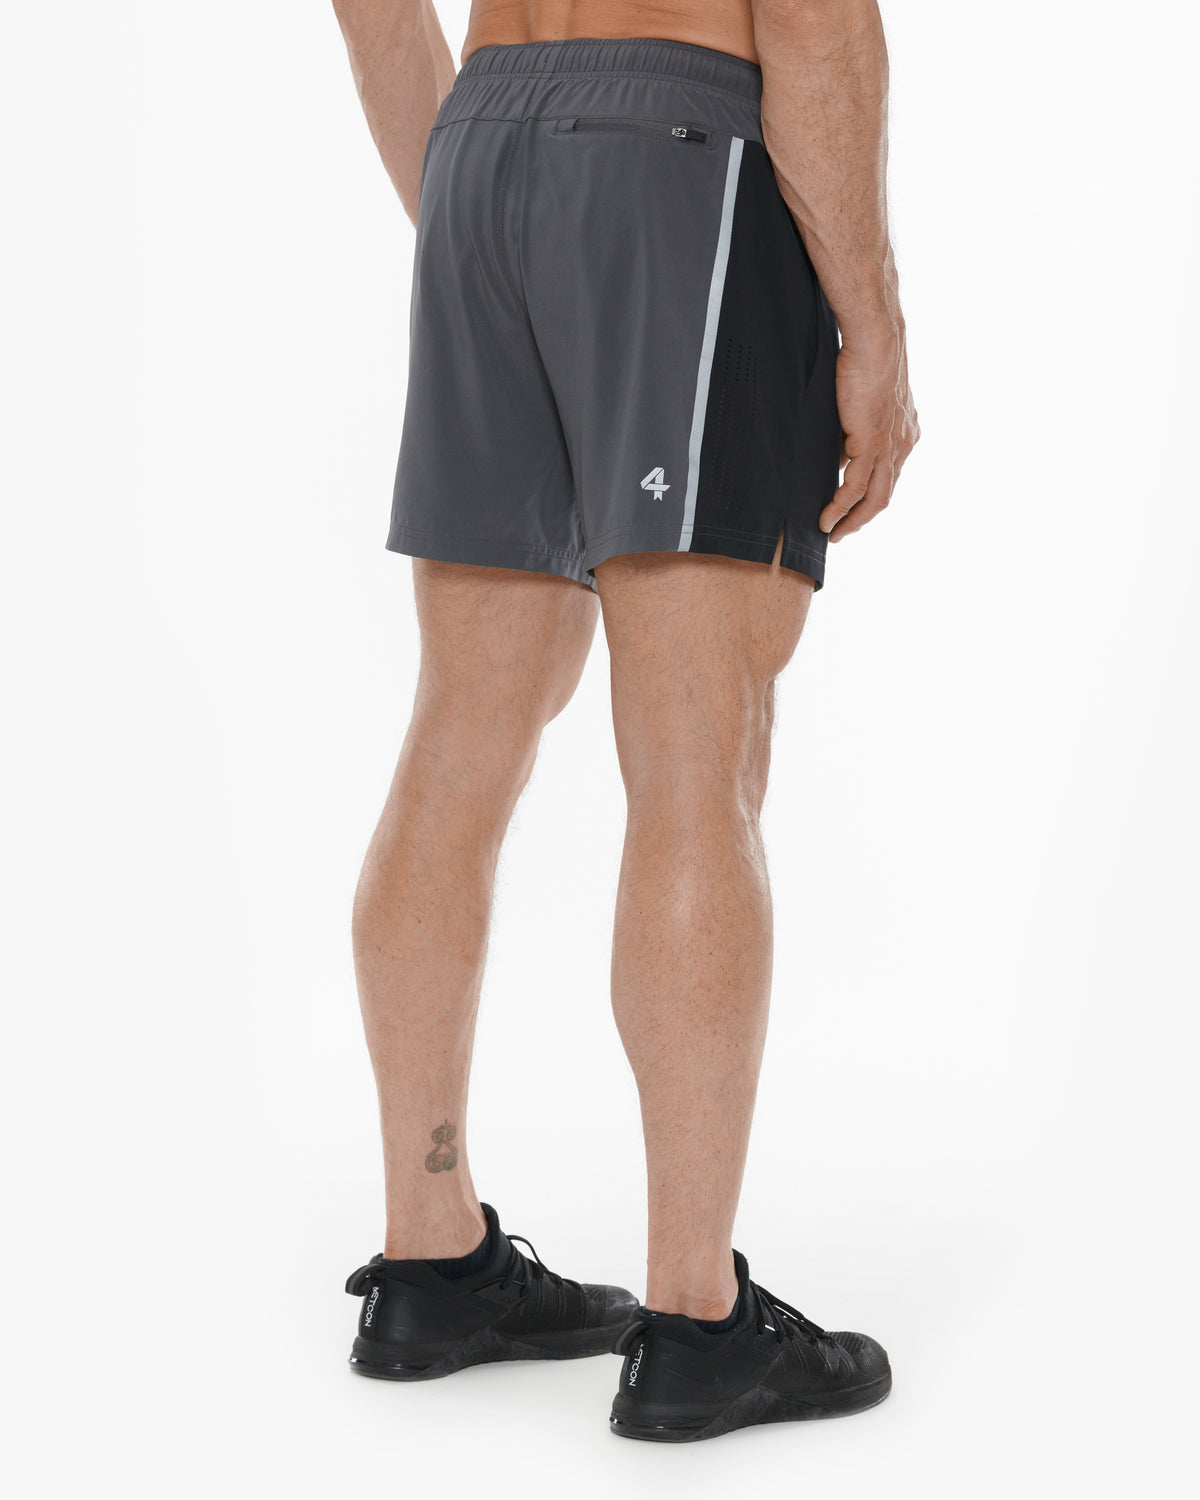 Endure Short: 6 inch Inseam Men's Shorts - Fourlaps